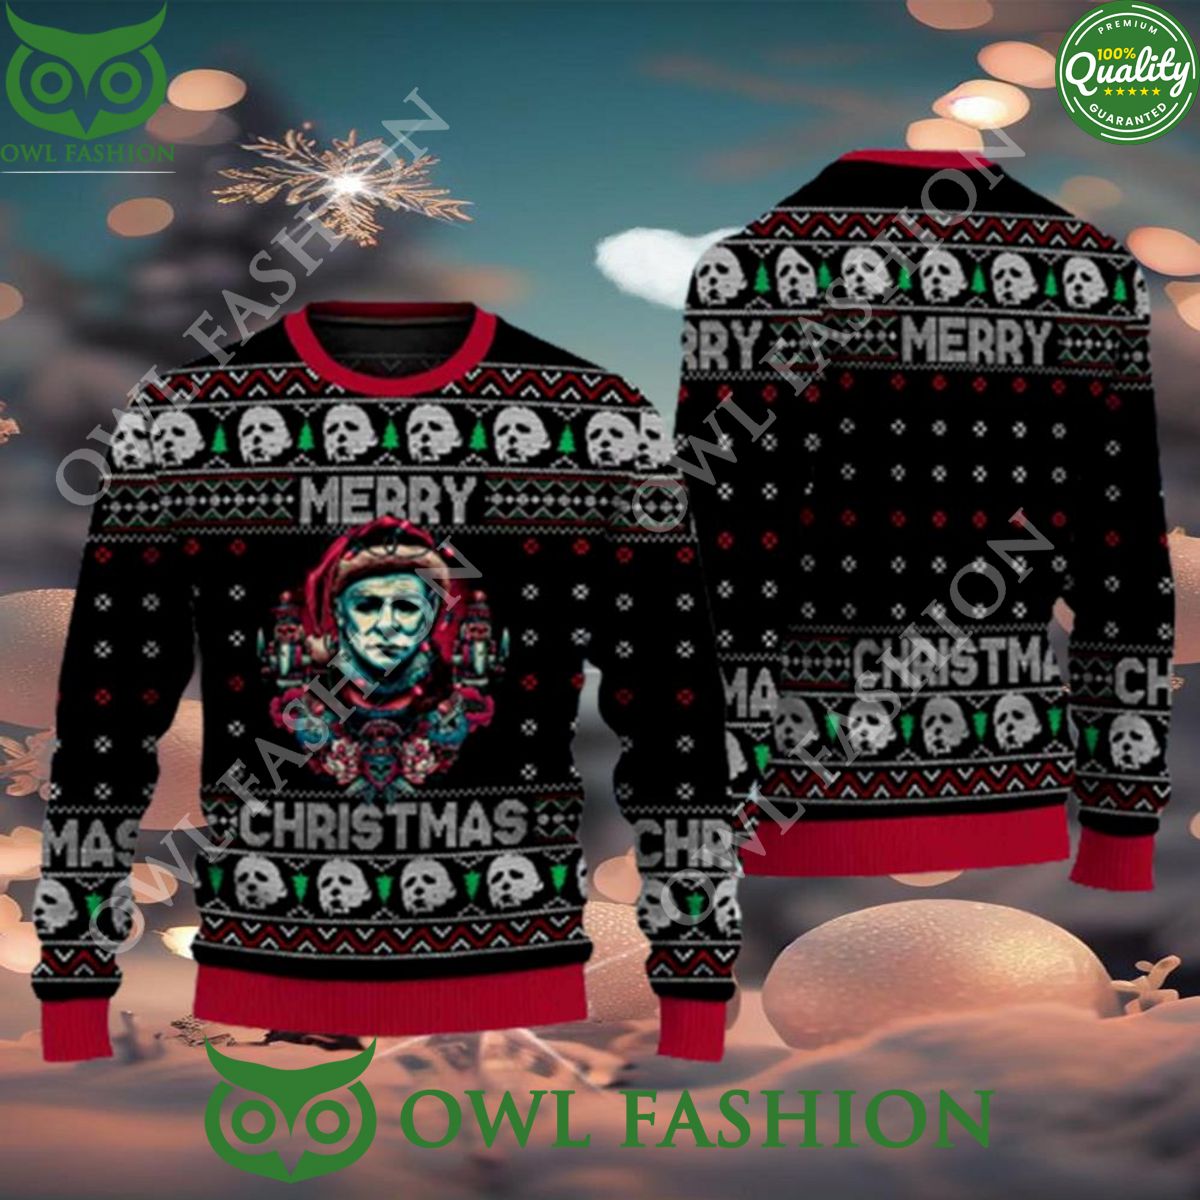 merry horror christmas premium ugly sweater jumper 1 WXMSB.jpg